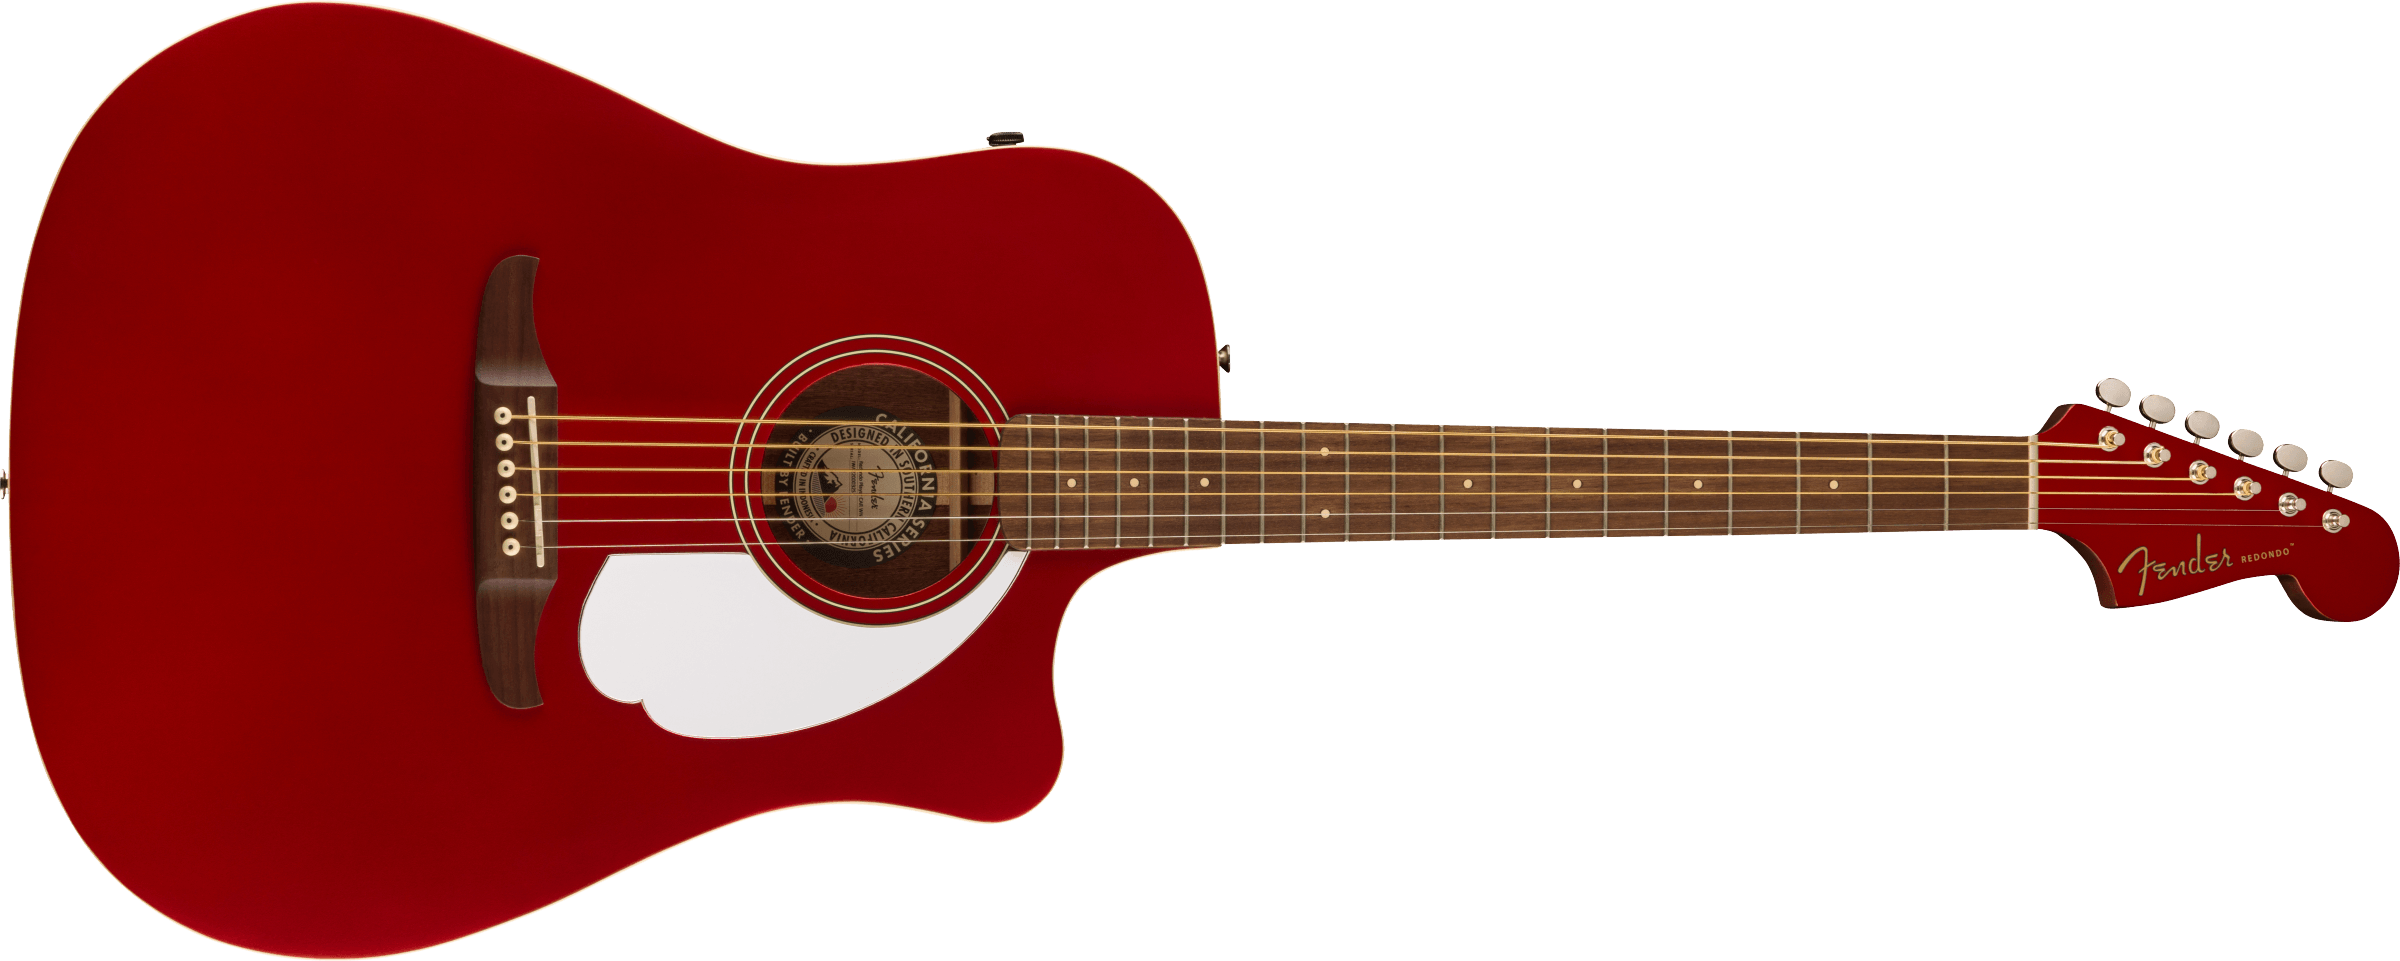 Fender® Redondo Player, Walnut Fingerboard, White Pickguard, Candy Apple Red